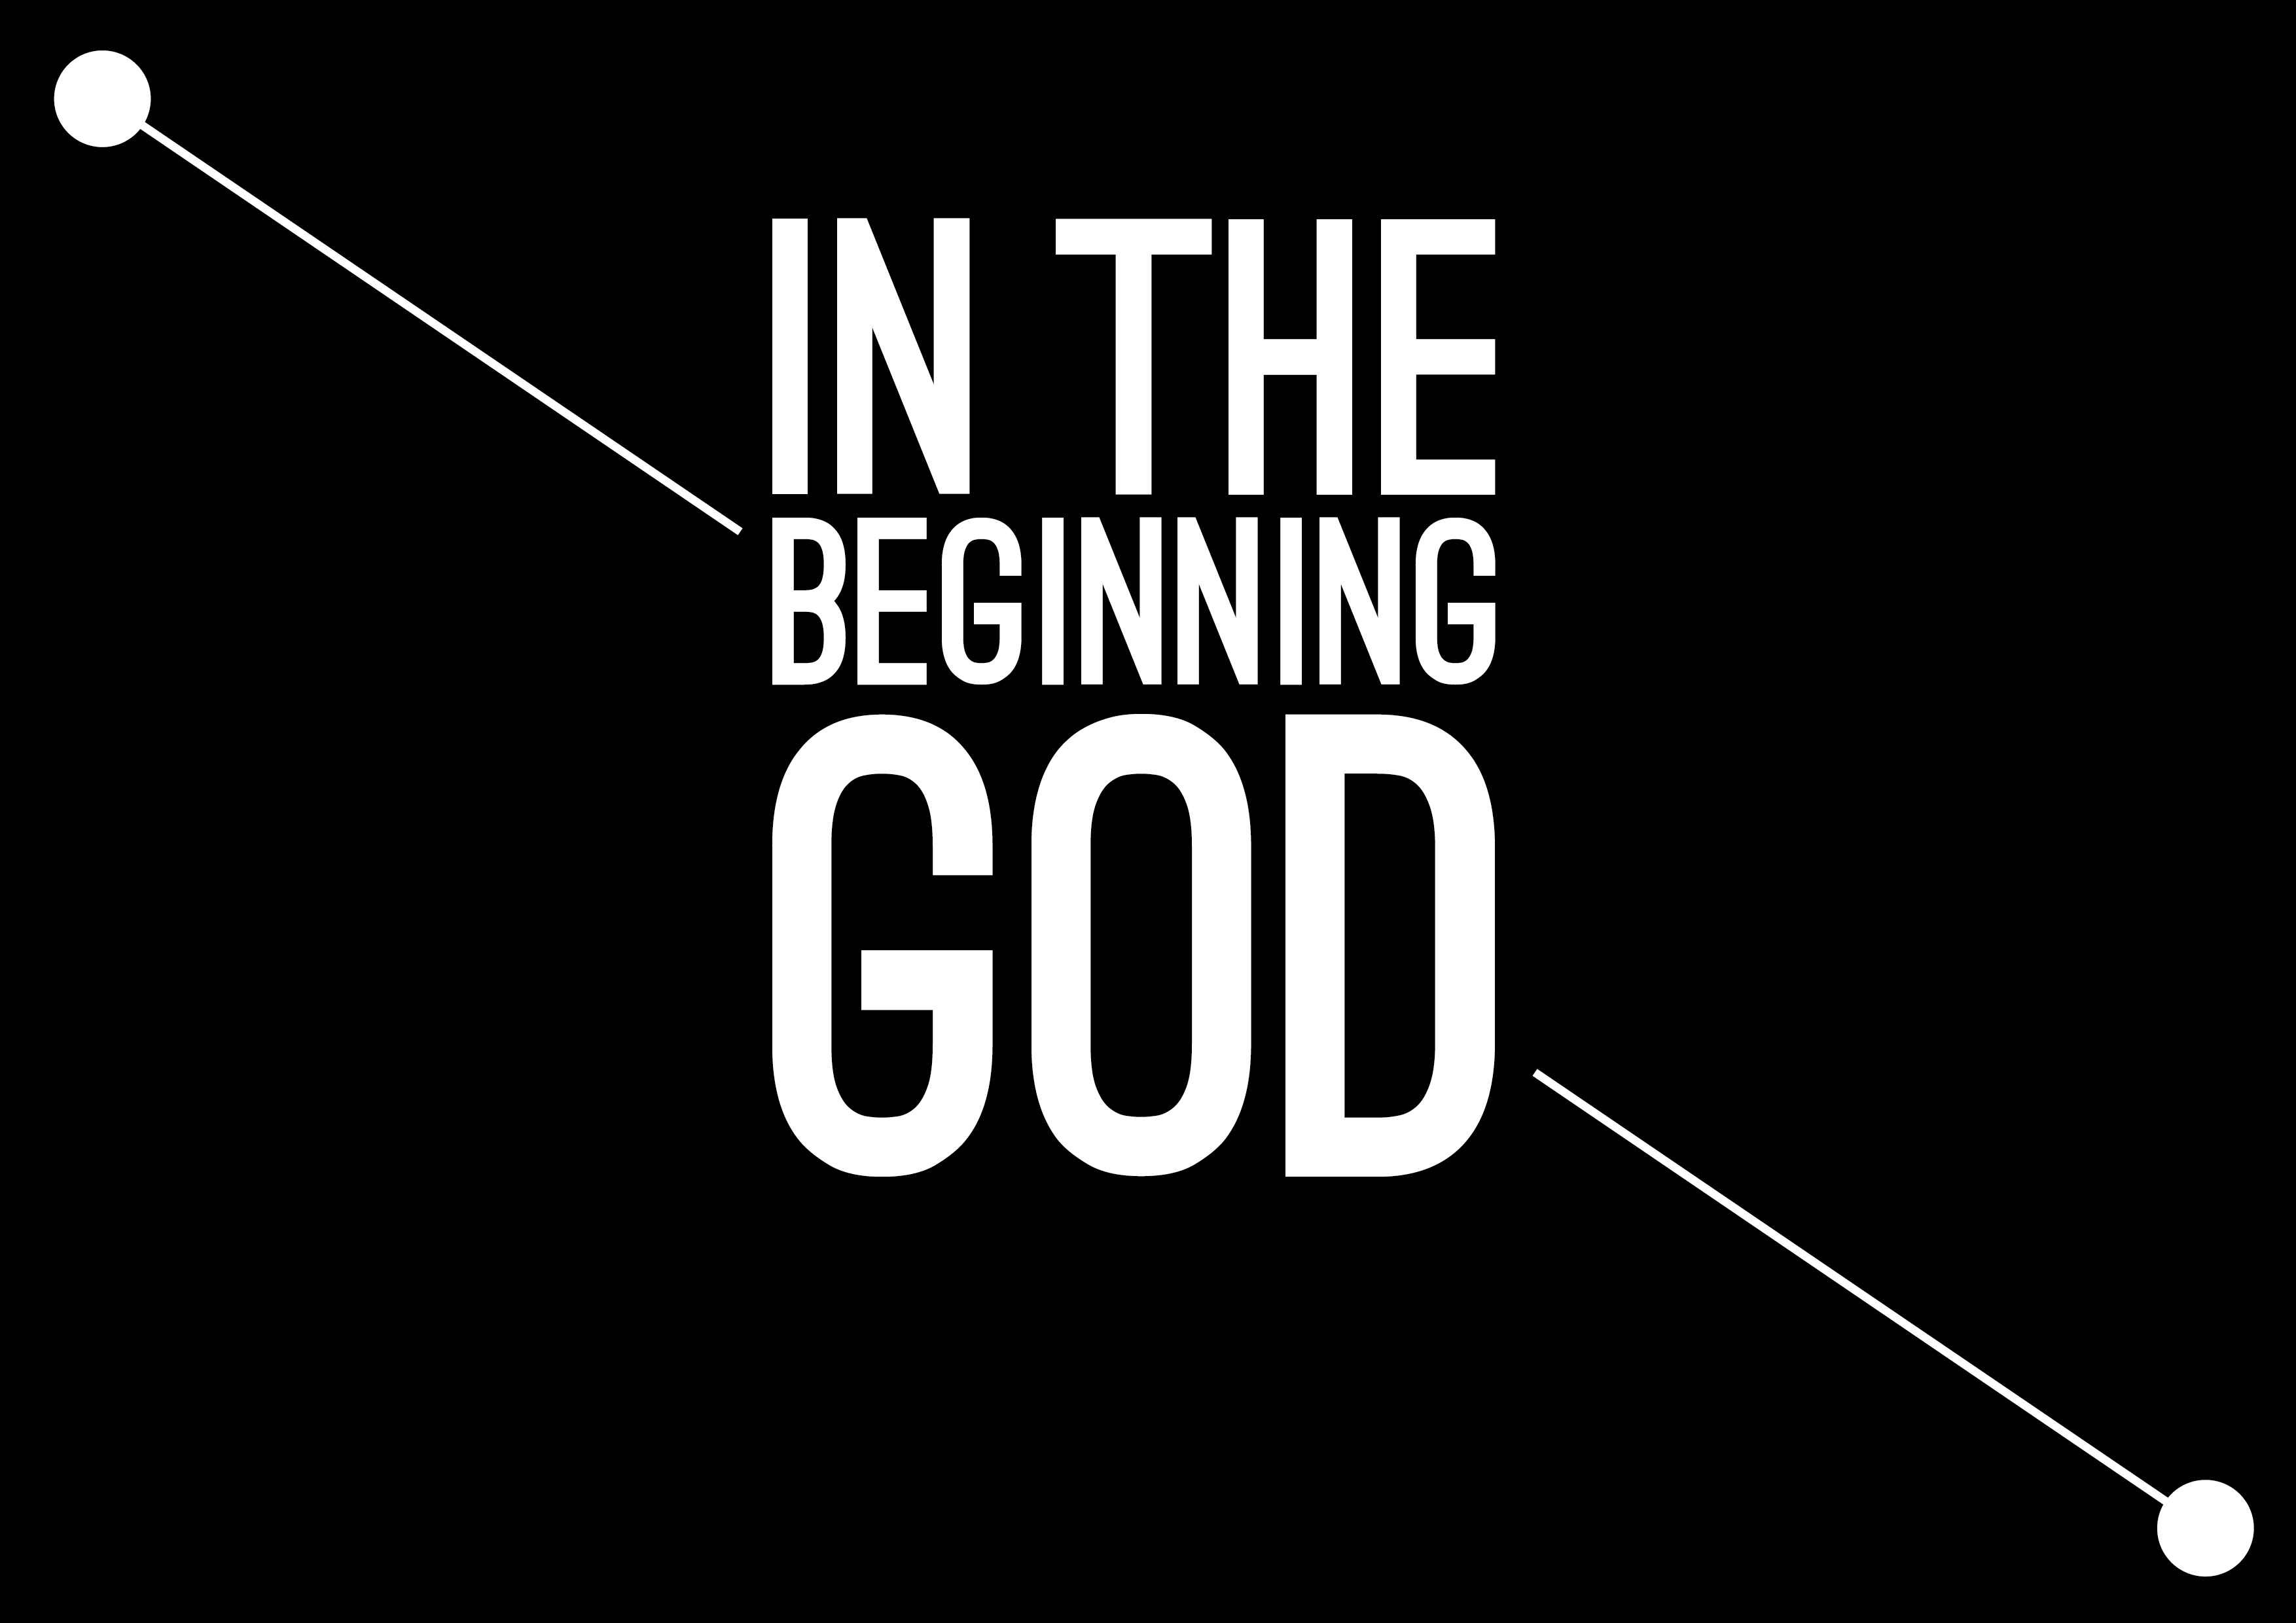 The making of a god. Beginning God.